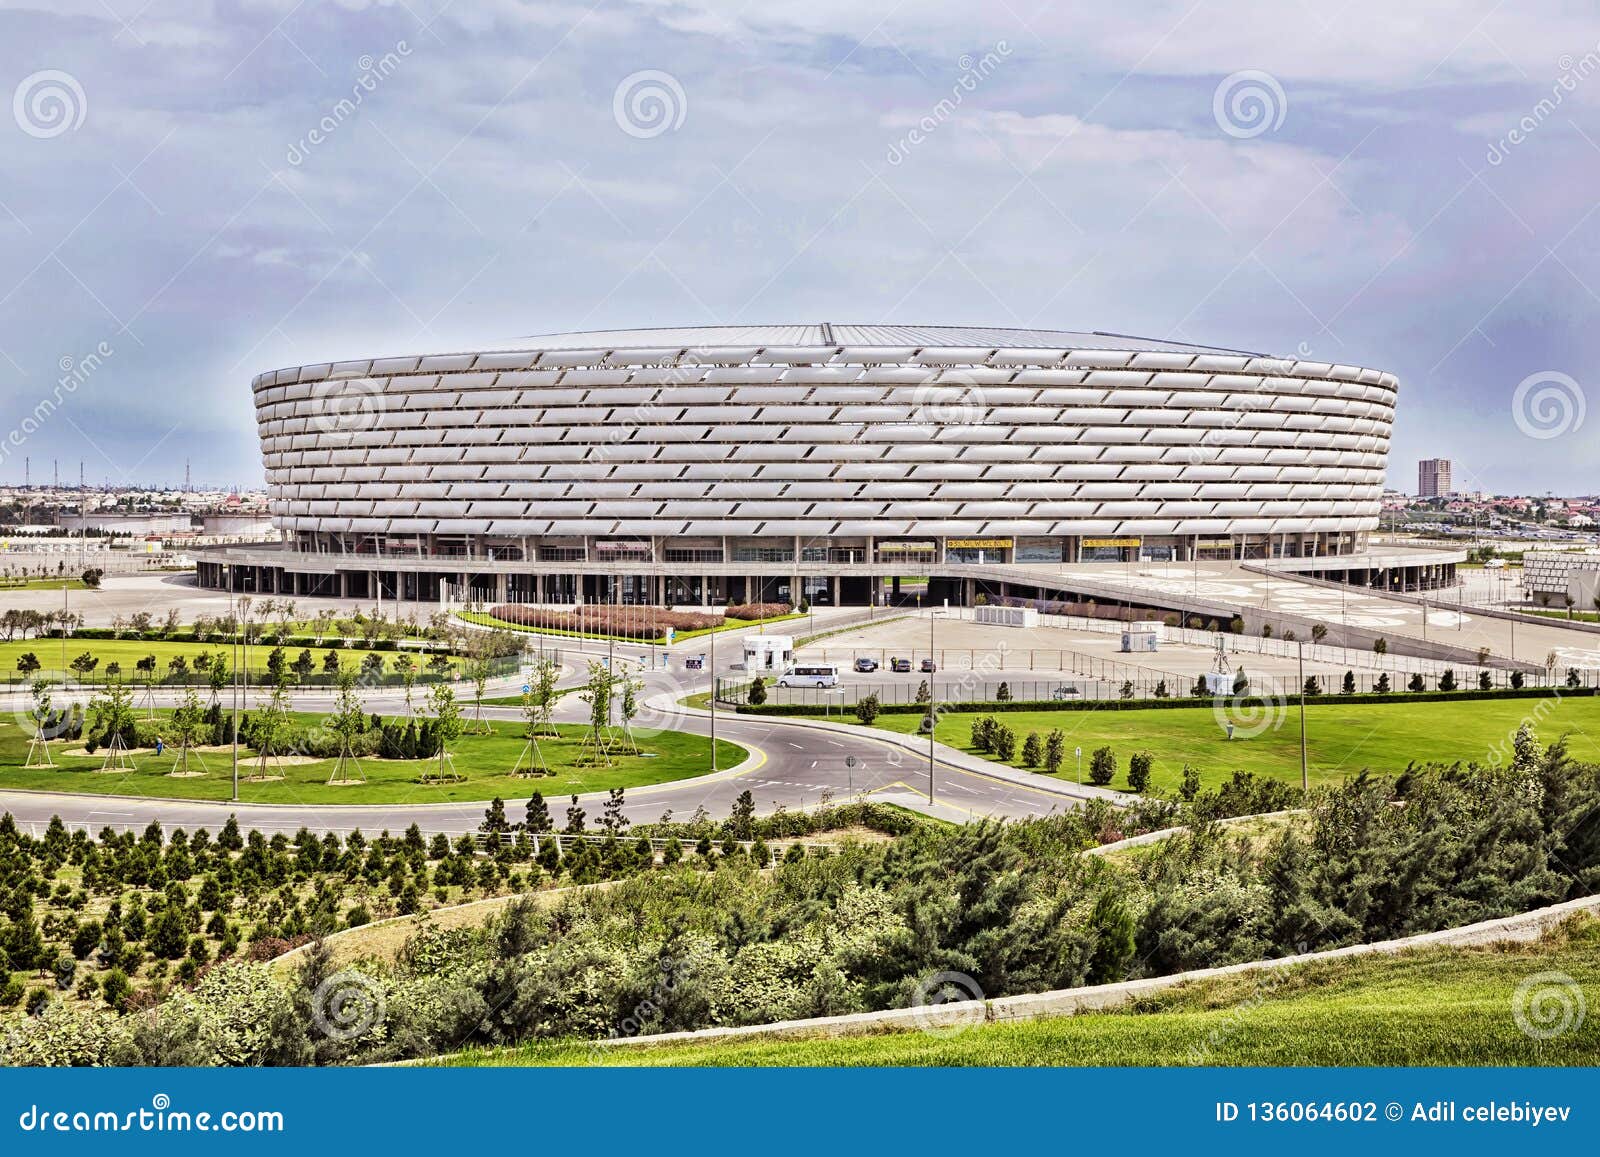 Baku olympic stadium